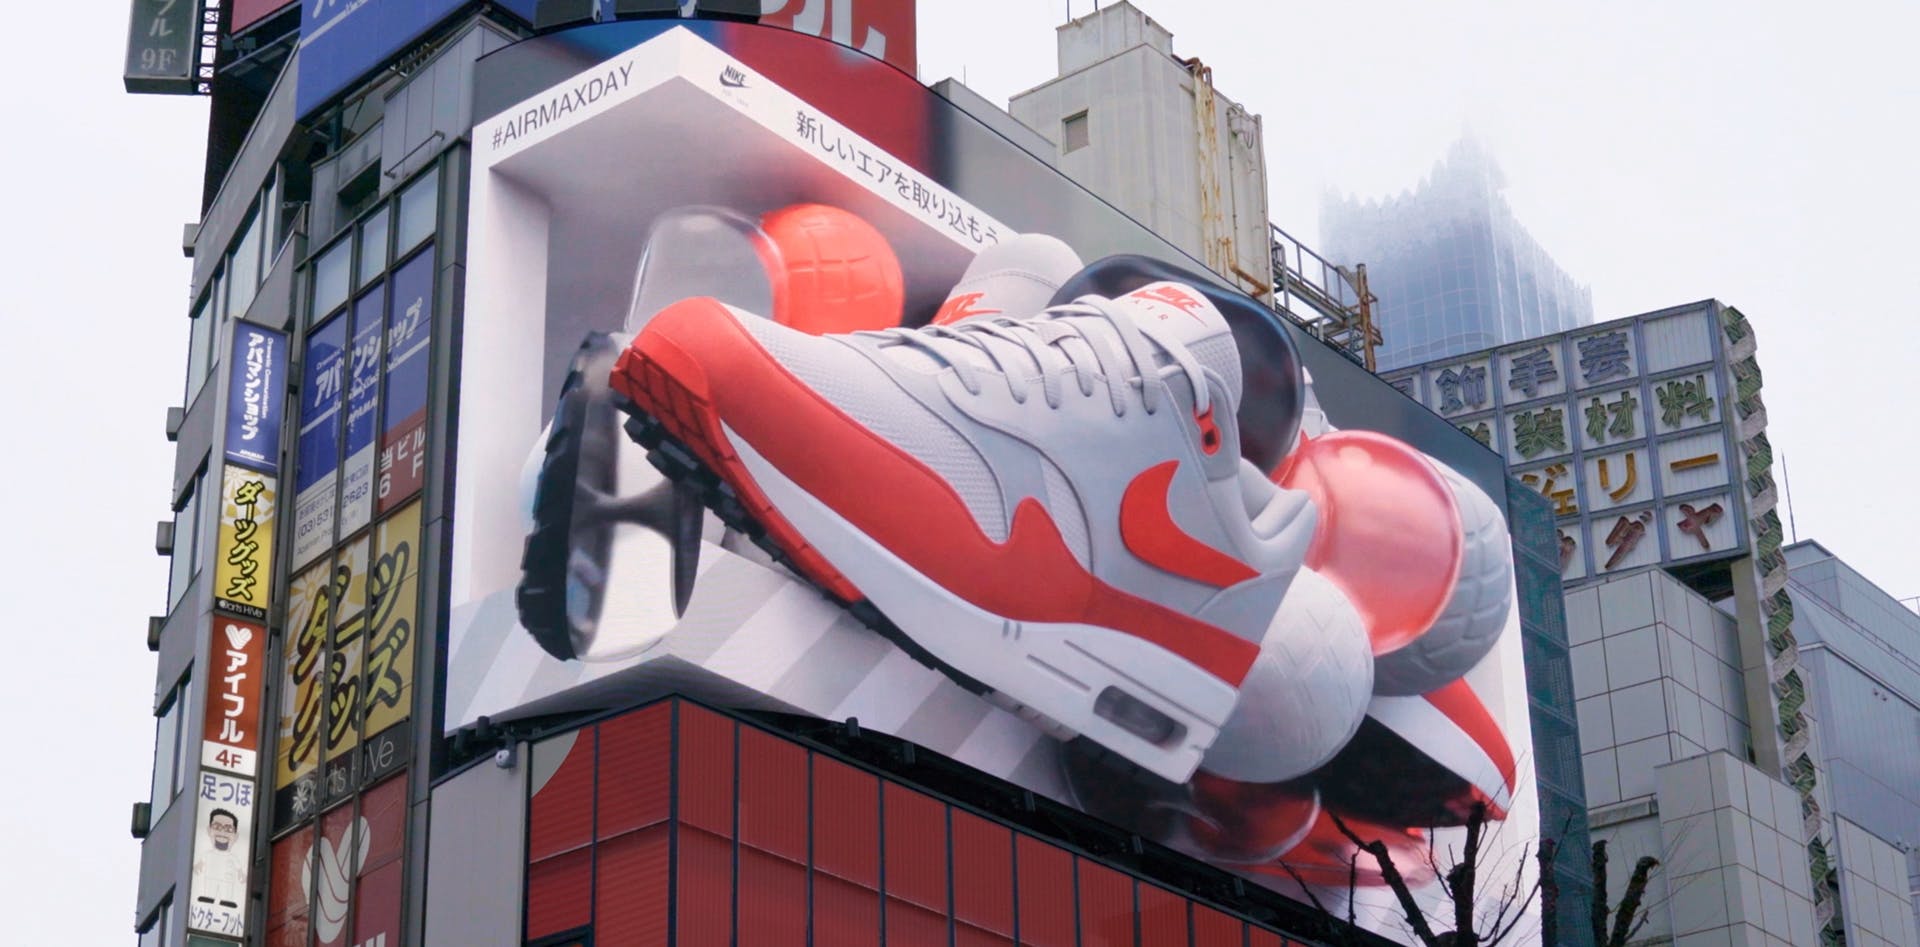 Potencial Pepino Narabar Nike celebrates Air Max Day with 3D billboard campaign